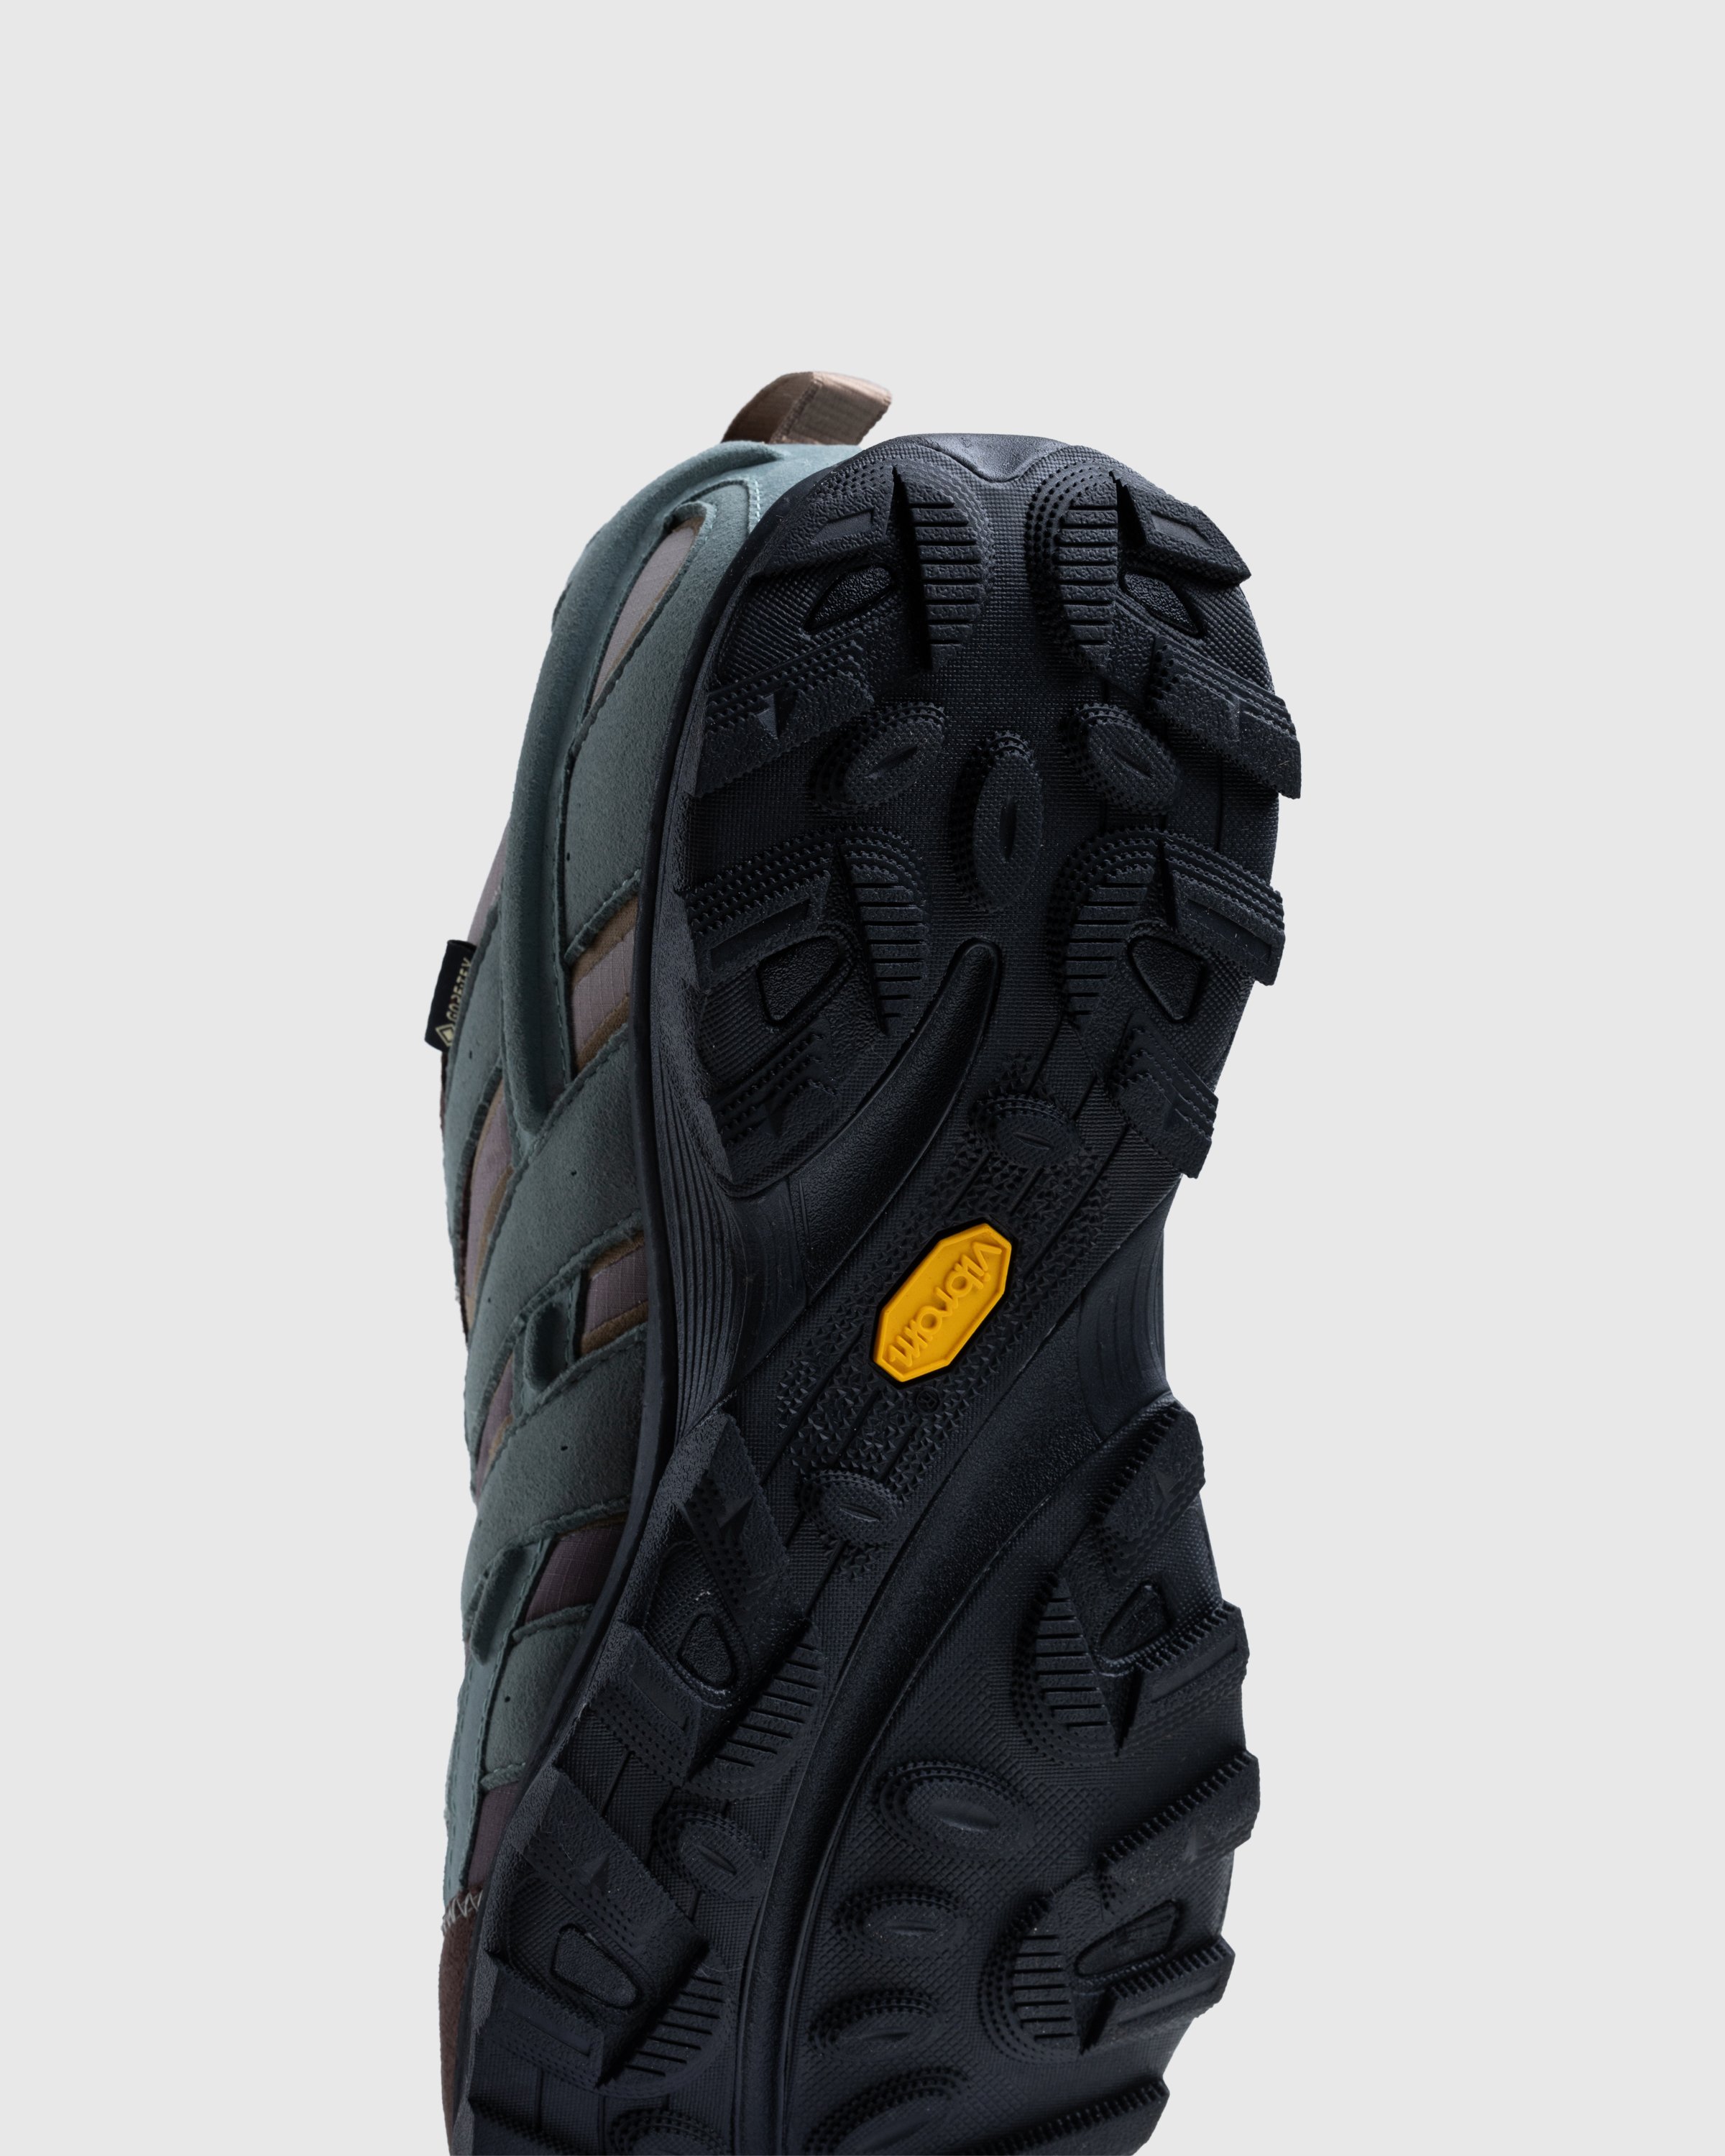 Merrell - Moab Speed Zip GORE-TEX Forest/Espresso - Footwear - Multi - Image 6